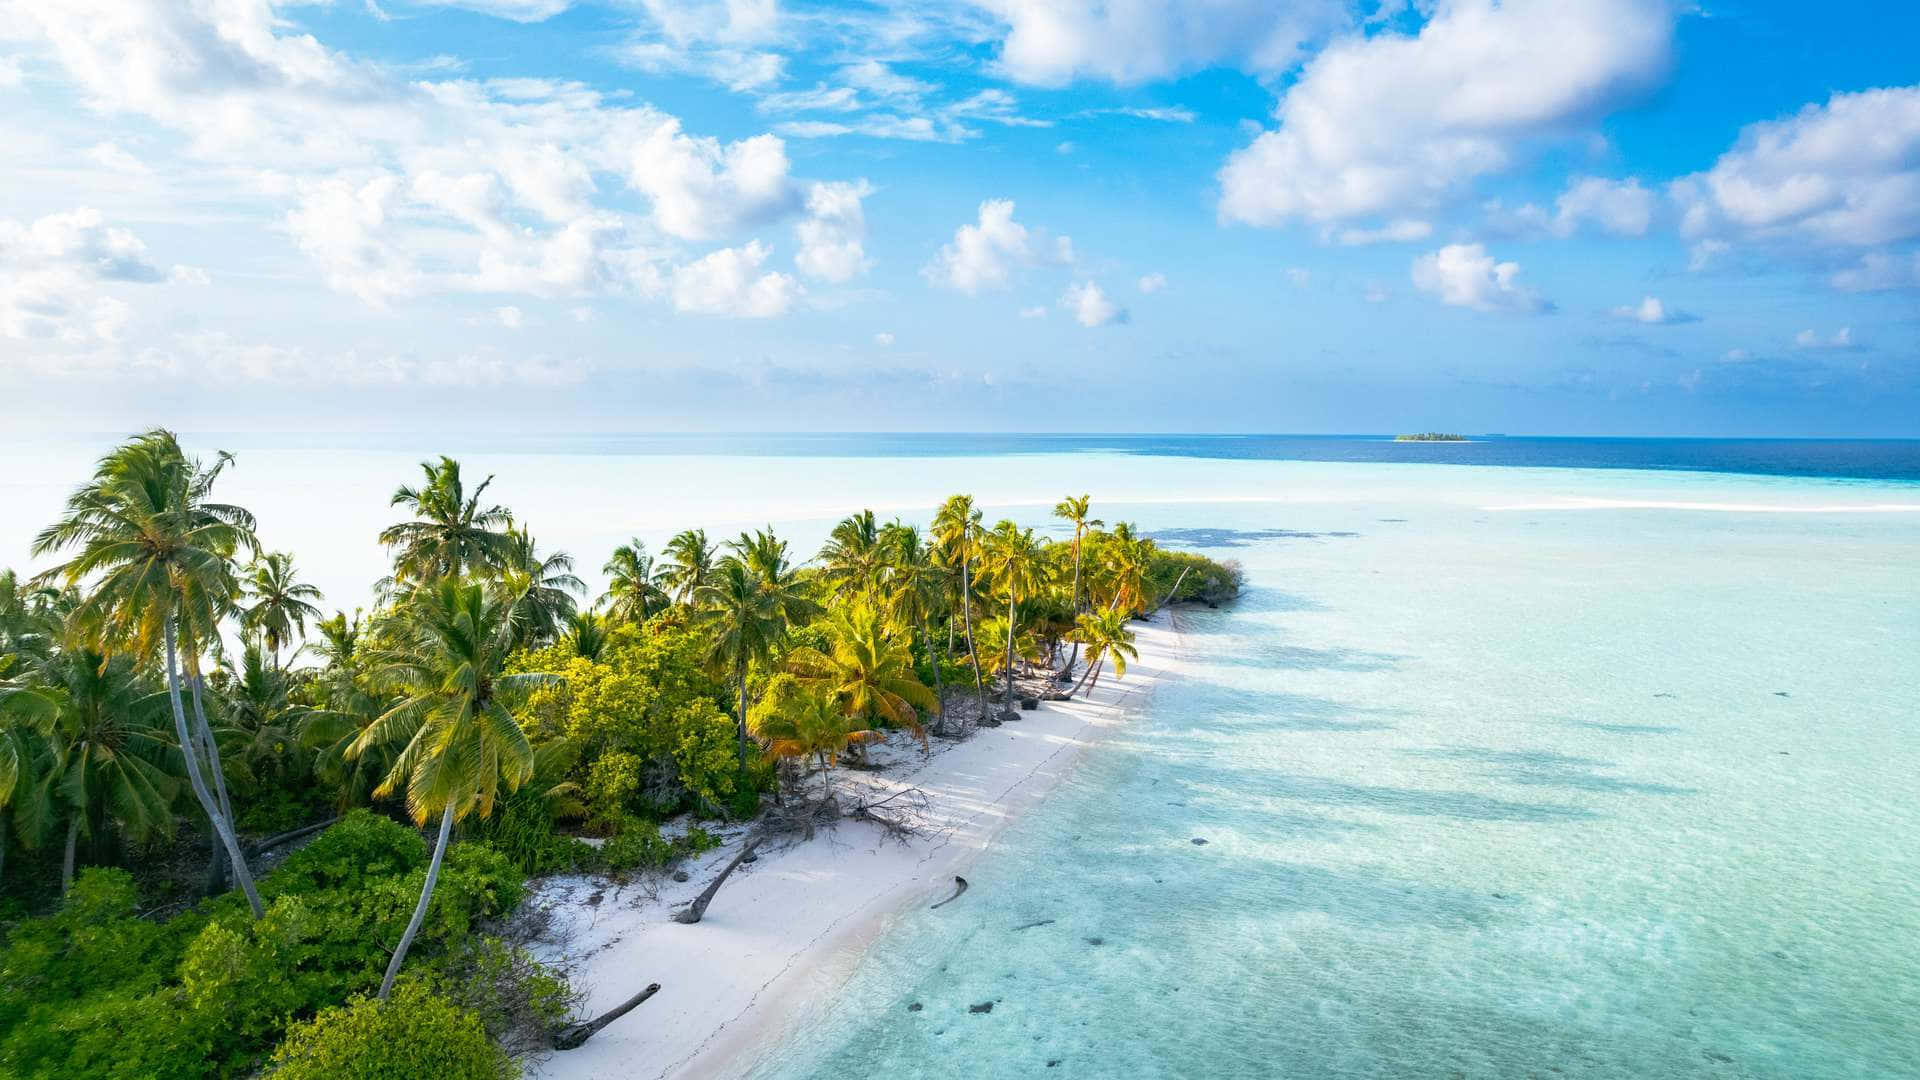 Enjoy your vacation at the tropical paradise of Maldives